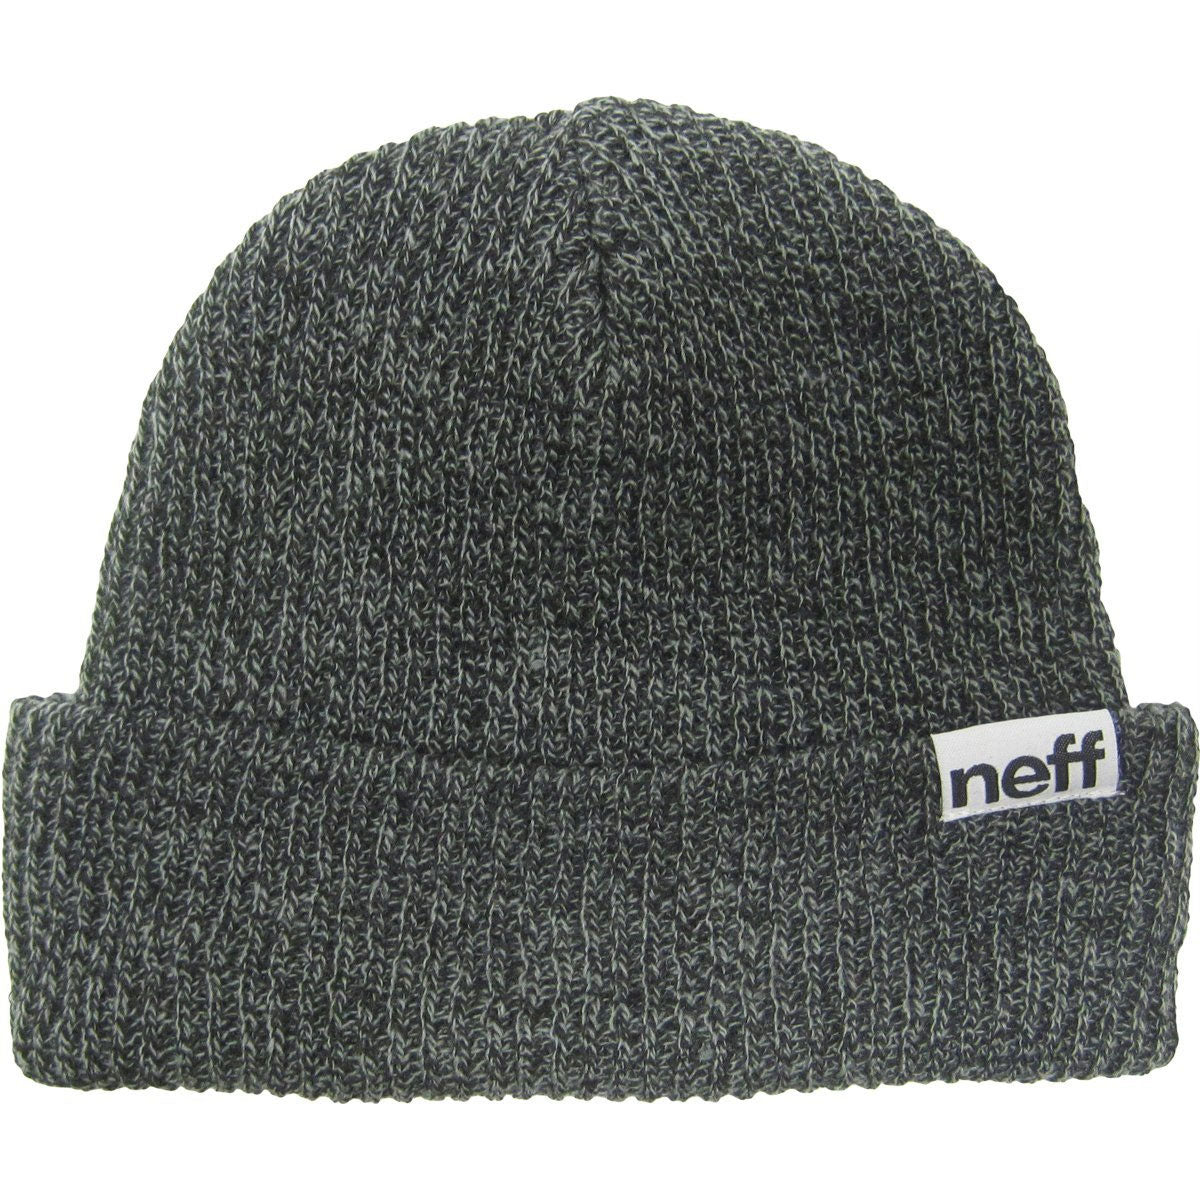 Neff Fold Heather Men's Beanie Hats - Black/Grey